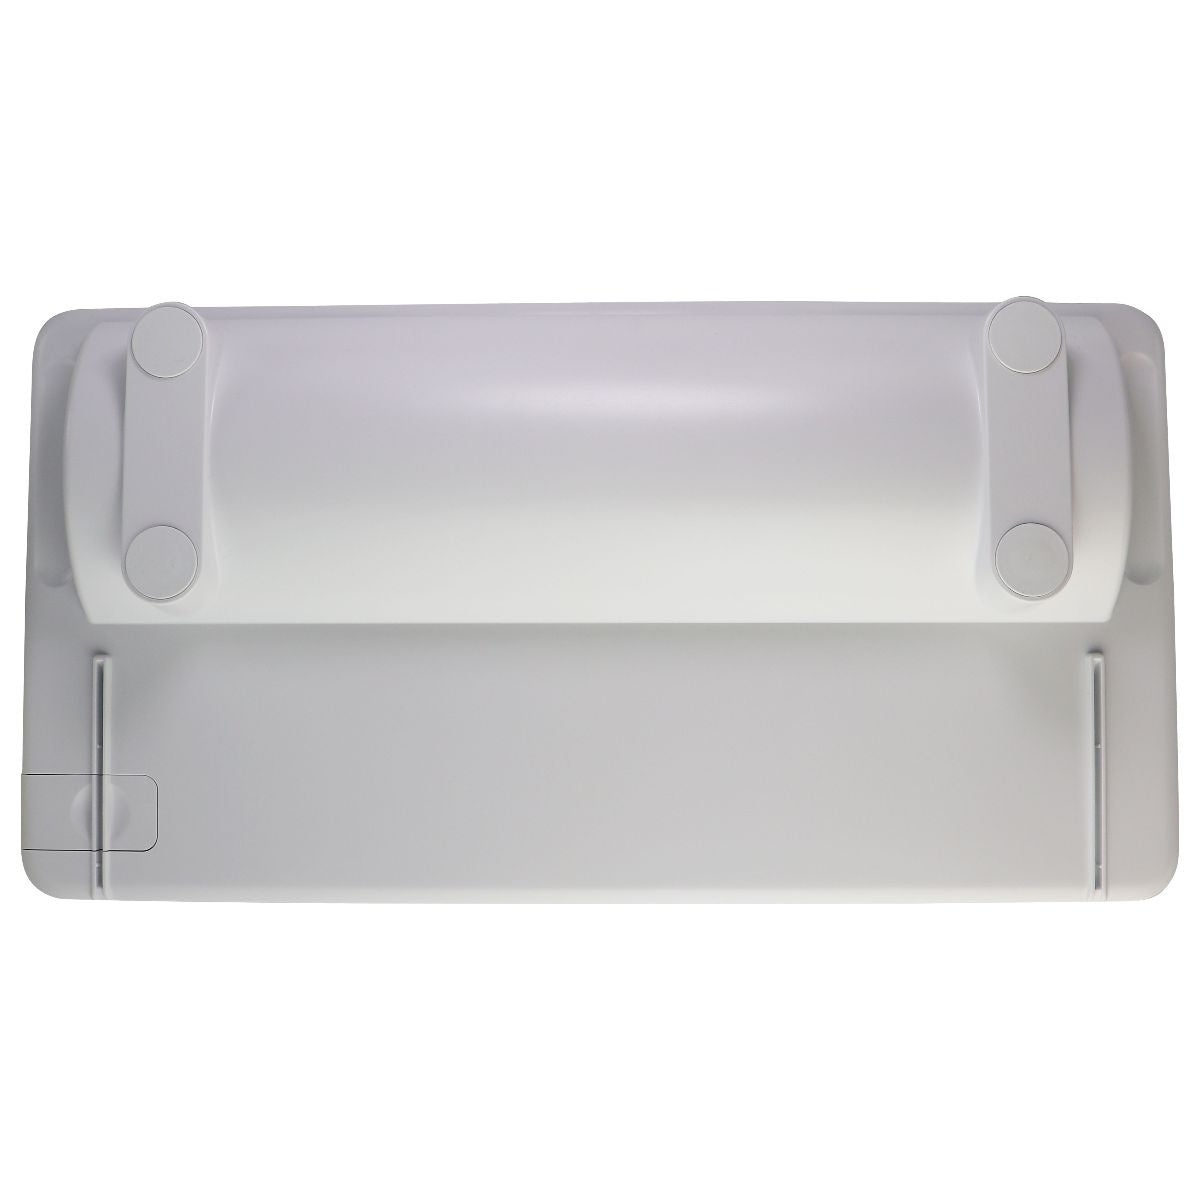 Cricut Roll Holder for Smart Materials - White (2009039) Home Improvement - Other Home Improvement Cricut    - Simple Cell Bulk Wholesale Pricing - USA Seller